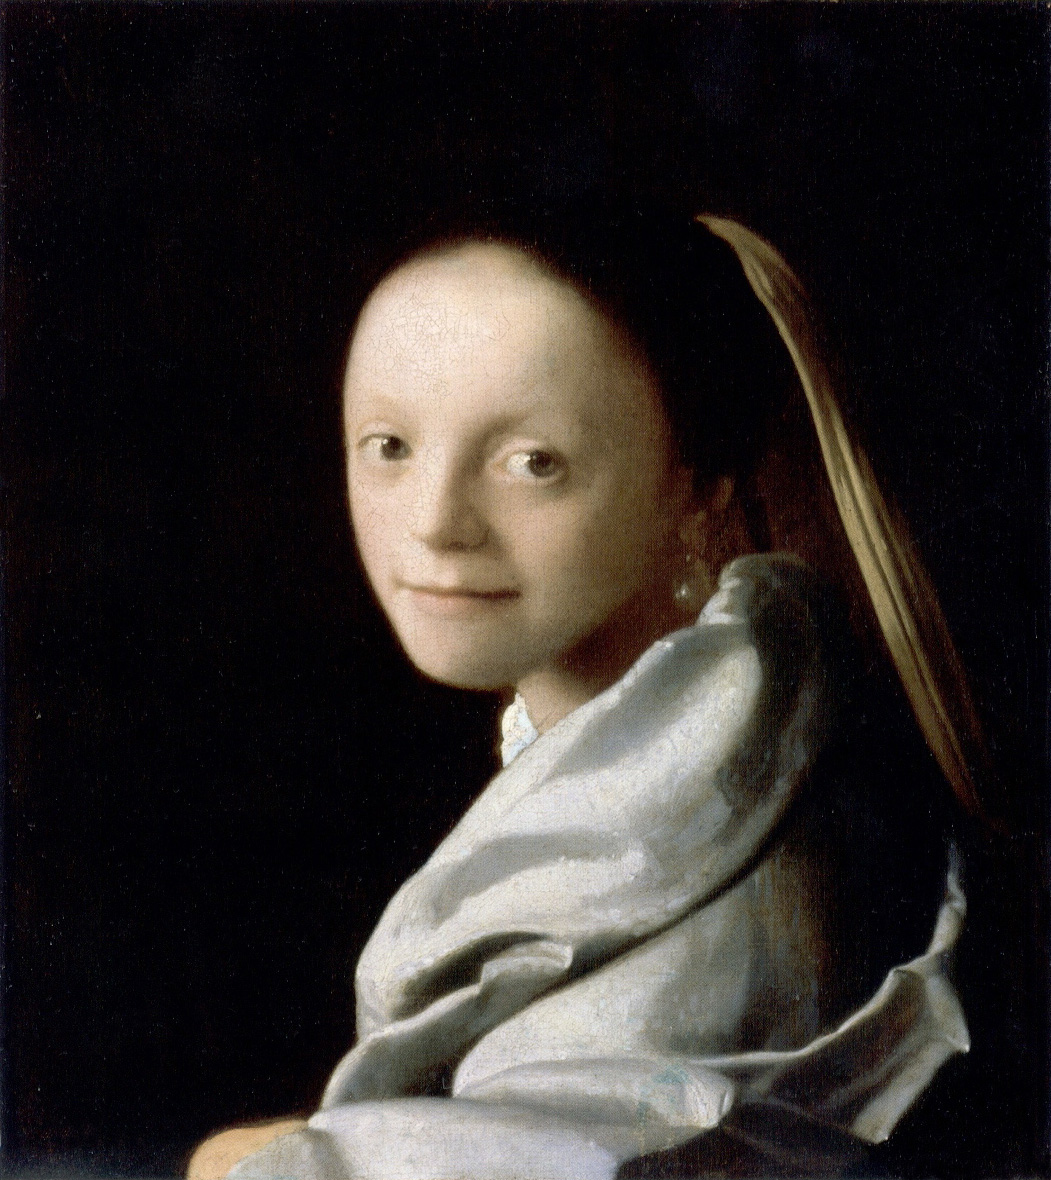 Study of Young Woman by Johannes Vermeer - 1665 - 44.5 x 40 cm Metropolitan Museum of Art